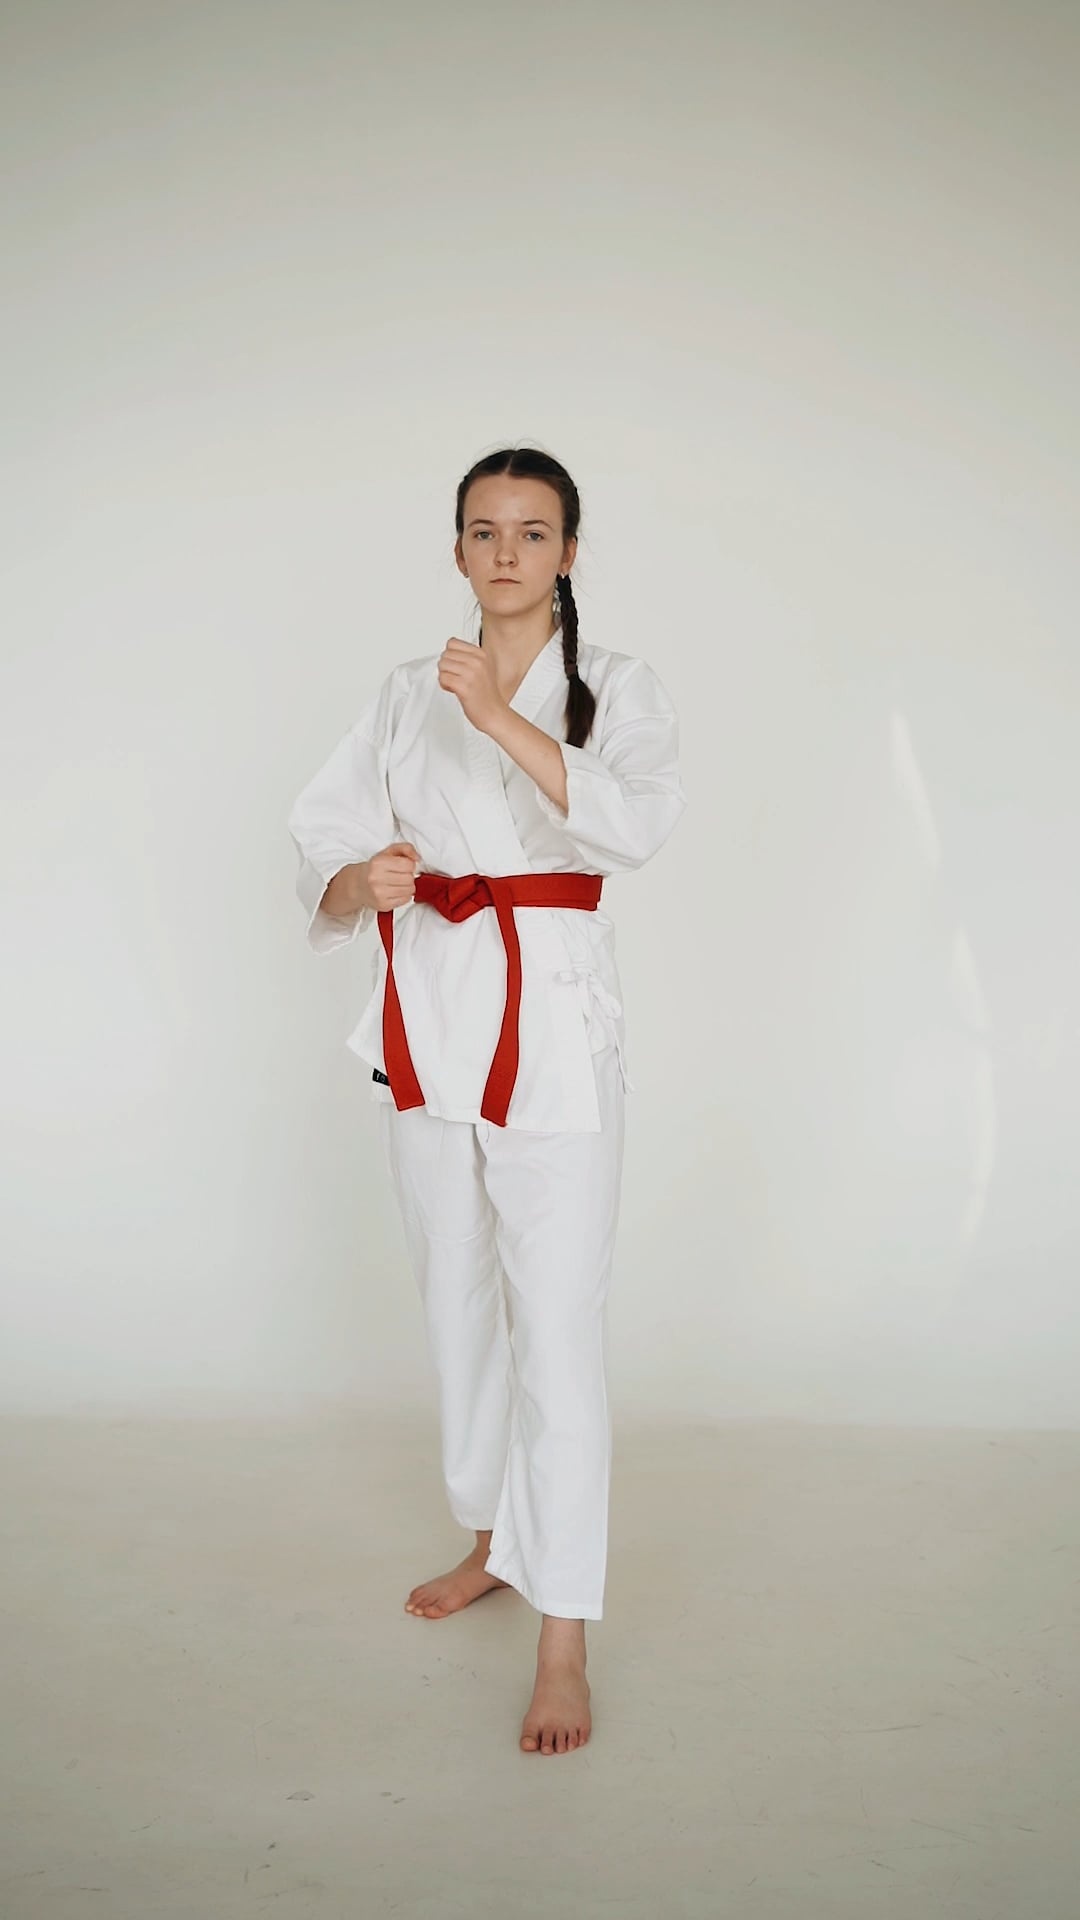 Karate: Red belt owner, A female karateka, Junior level combat sports. 1080x1920 Full HD Wallpaper.